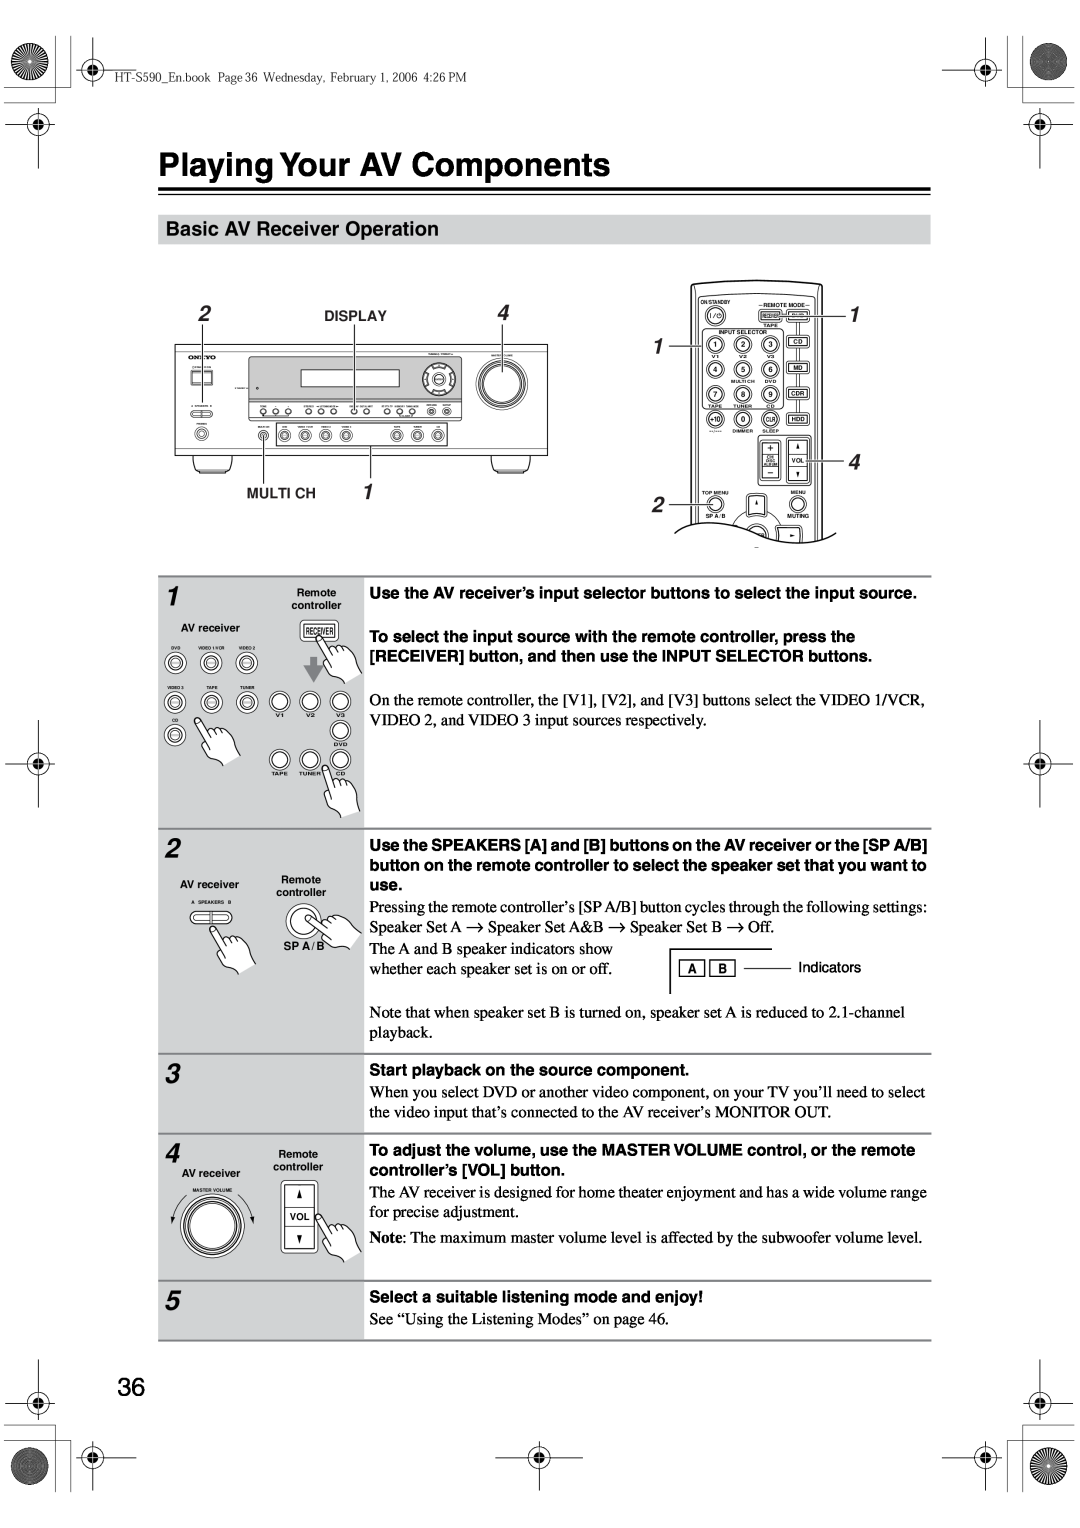 Onkyo SKC-340C, SKF-340F, SKM-340S, SKW-340 instruction manual Playing Your AV Components, Basic AV Receiver Operation 